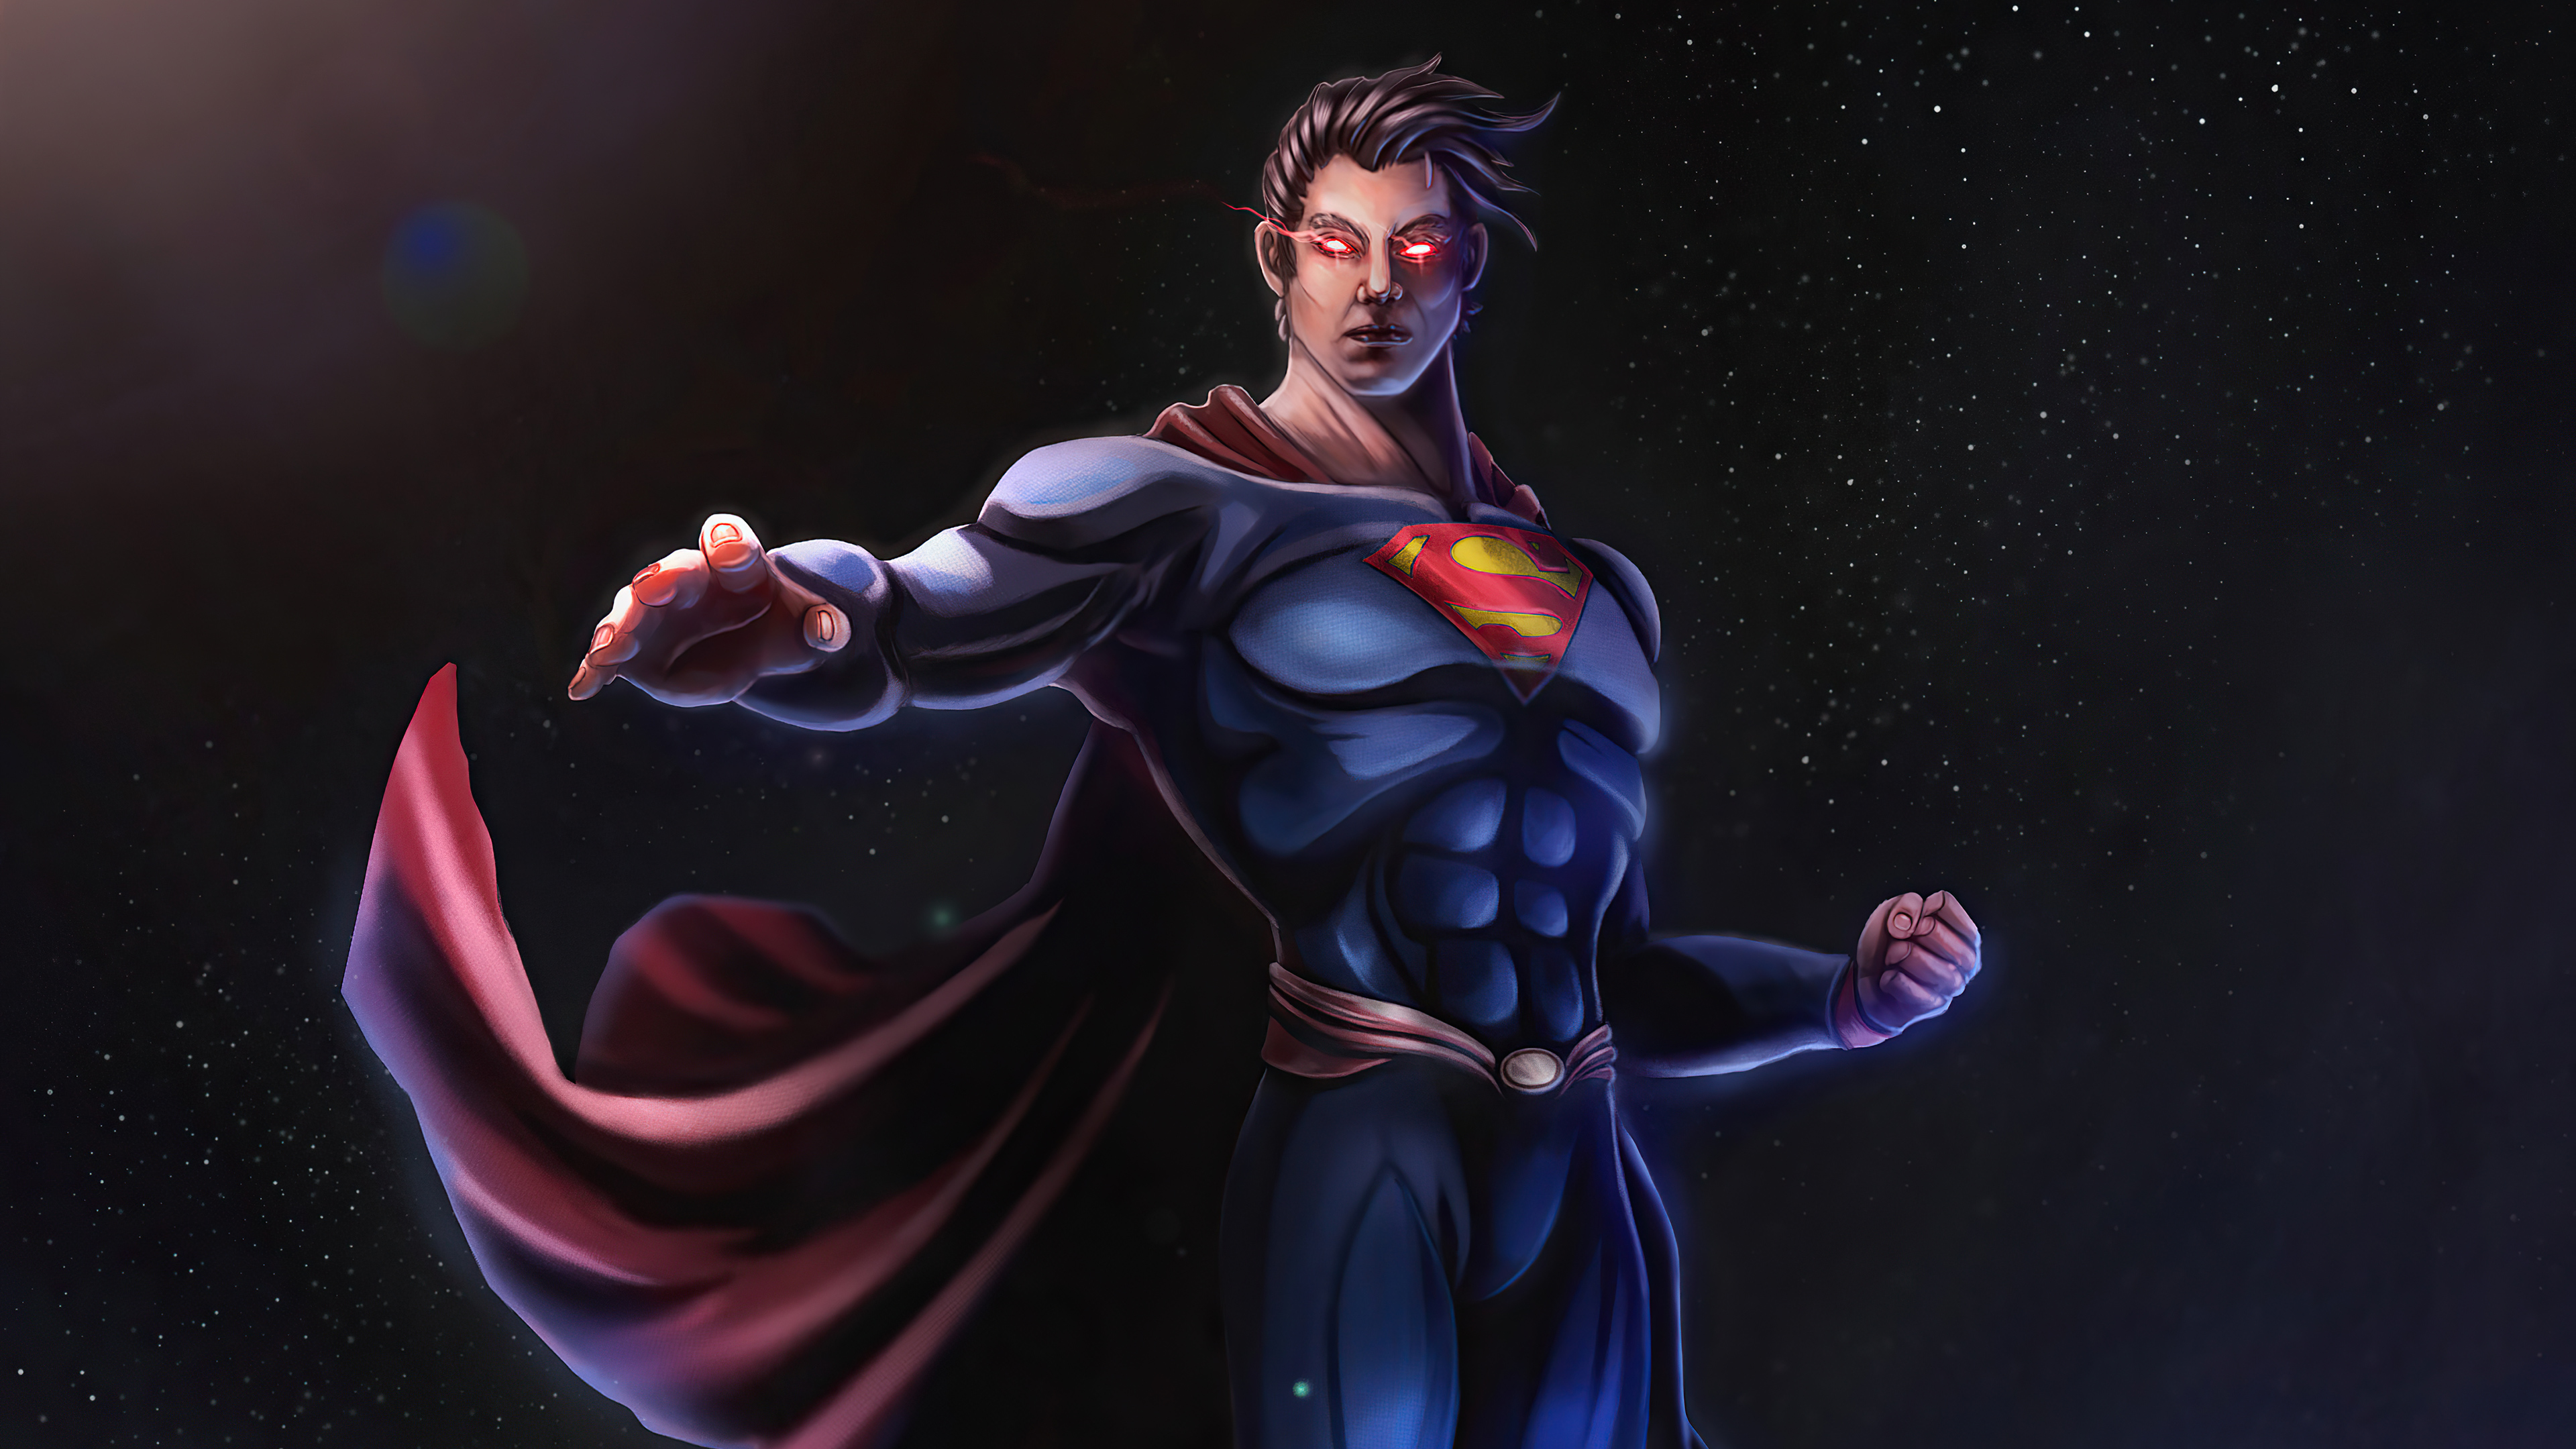 Superman Man of steel Comic Art Wallpaper 4k Ultra HD ID:8478